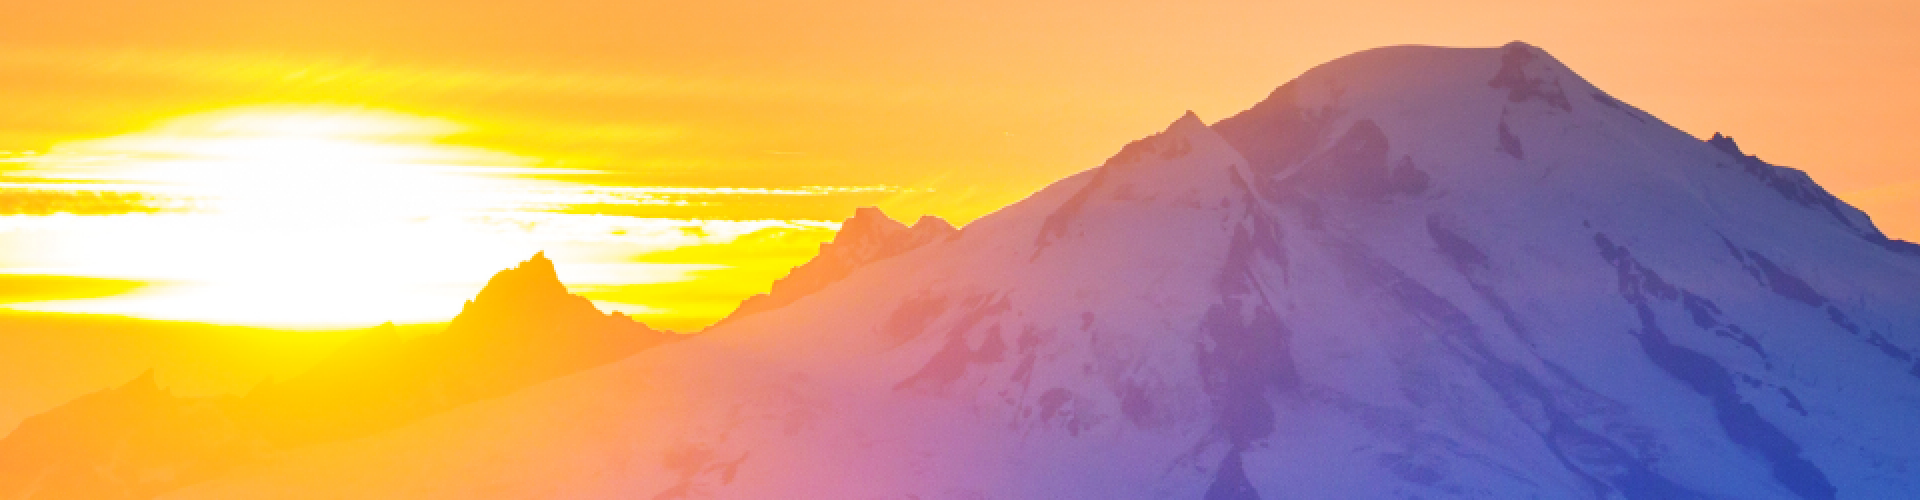 orange sunset behind purple mountains